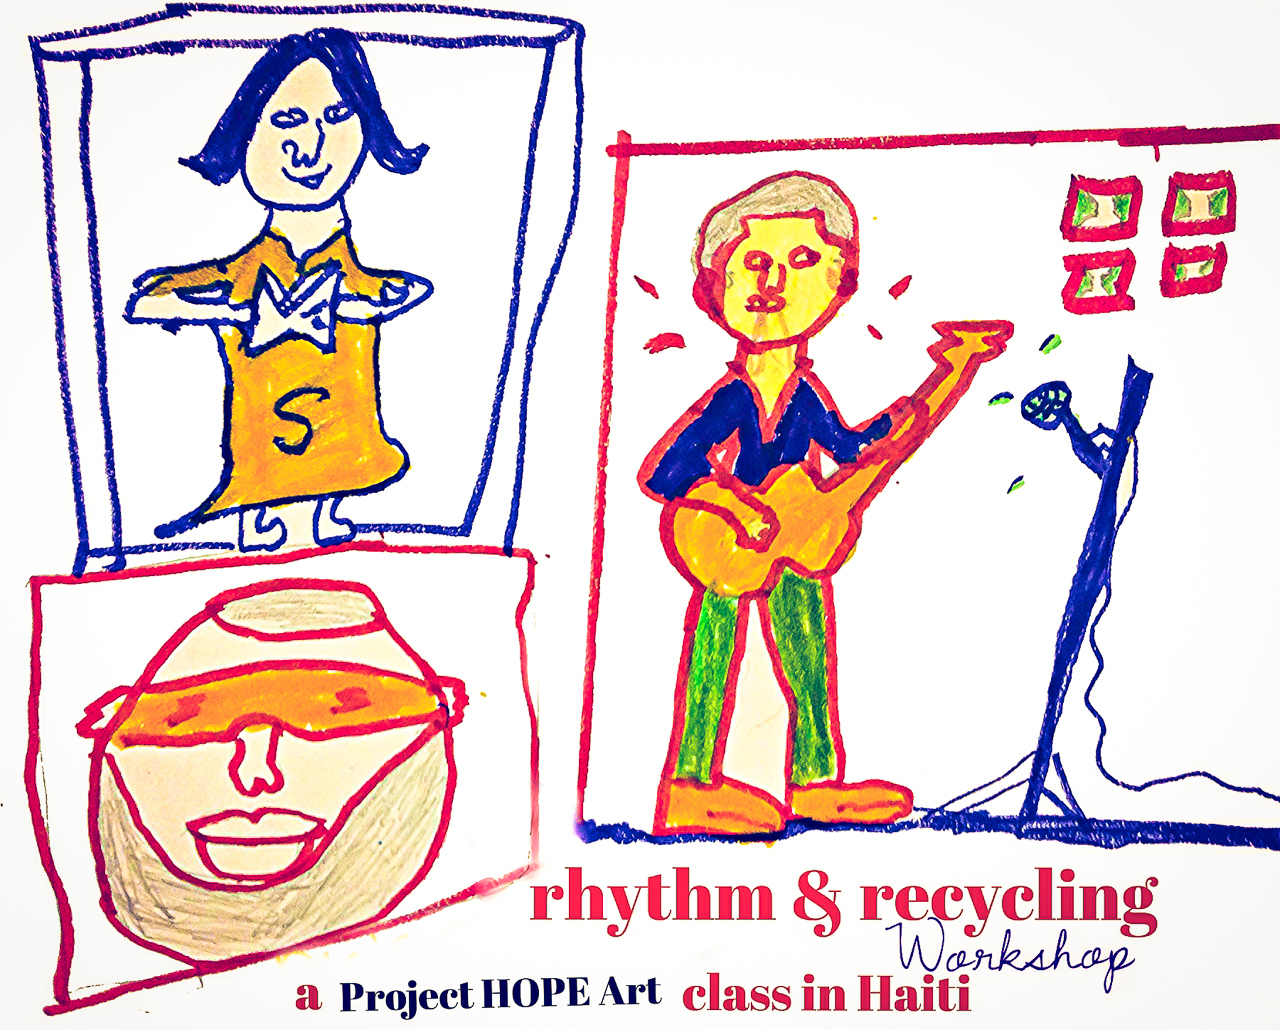 Project HOPE Art RHYTHMRECYCLING